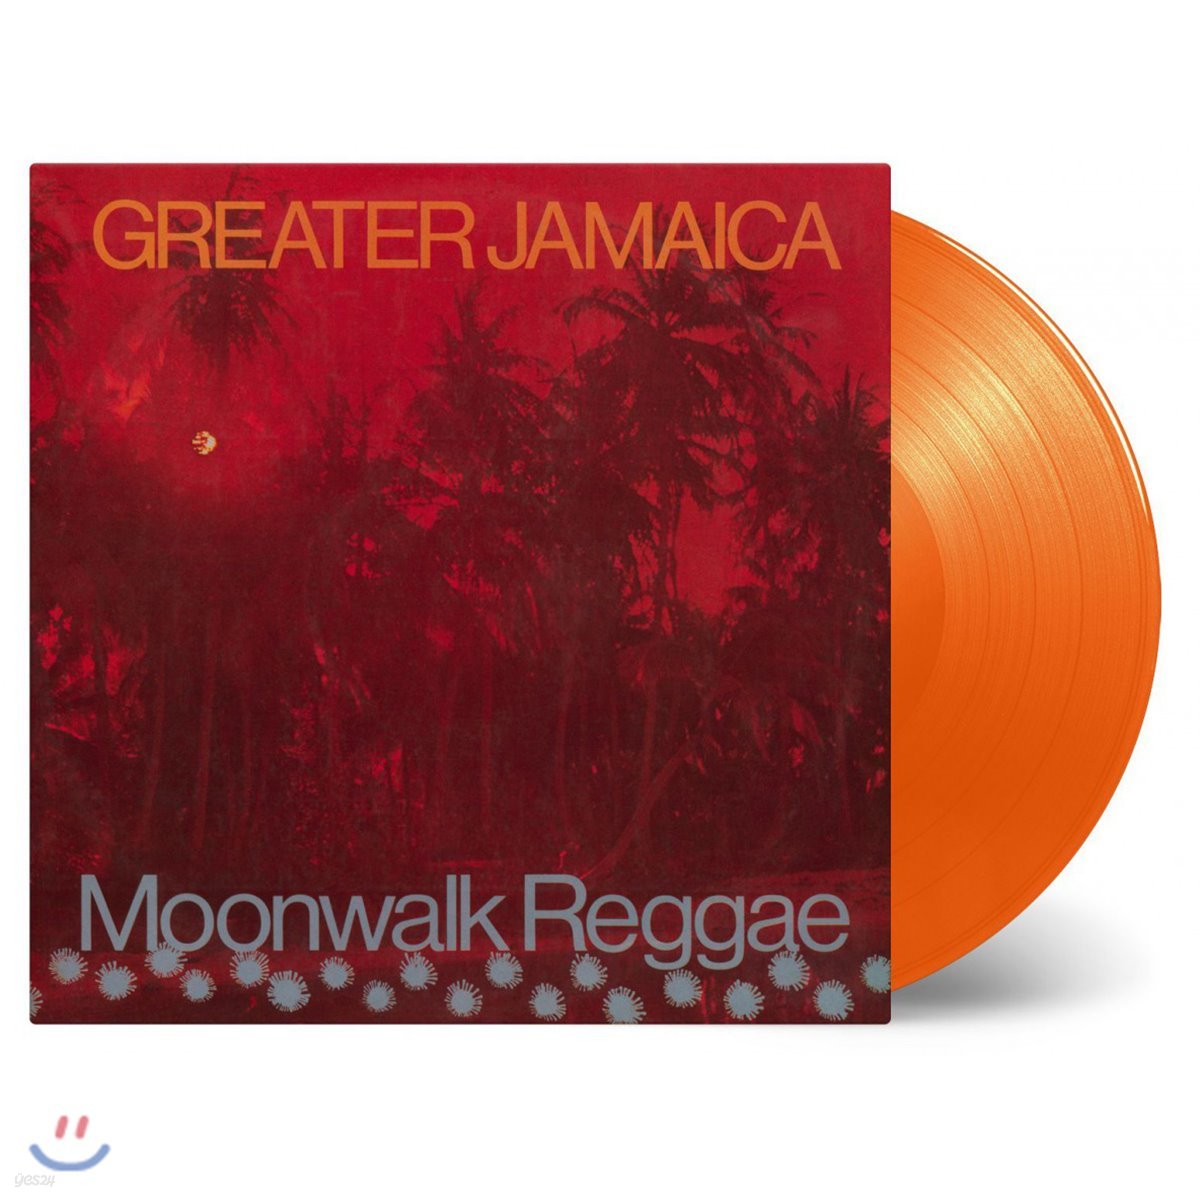 Tommy Mccook And The Supersonics (토미 맥쿡 앤 더 슈퍼소닉스) - Greater Jamaica Moonwalk Reggae [오렌지 컬러 LP]